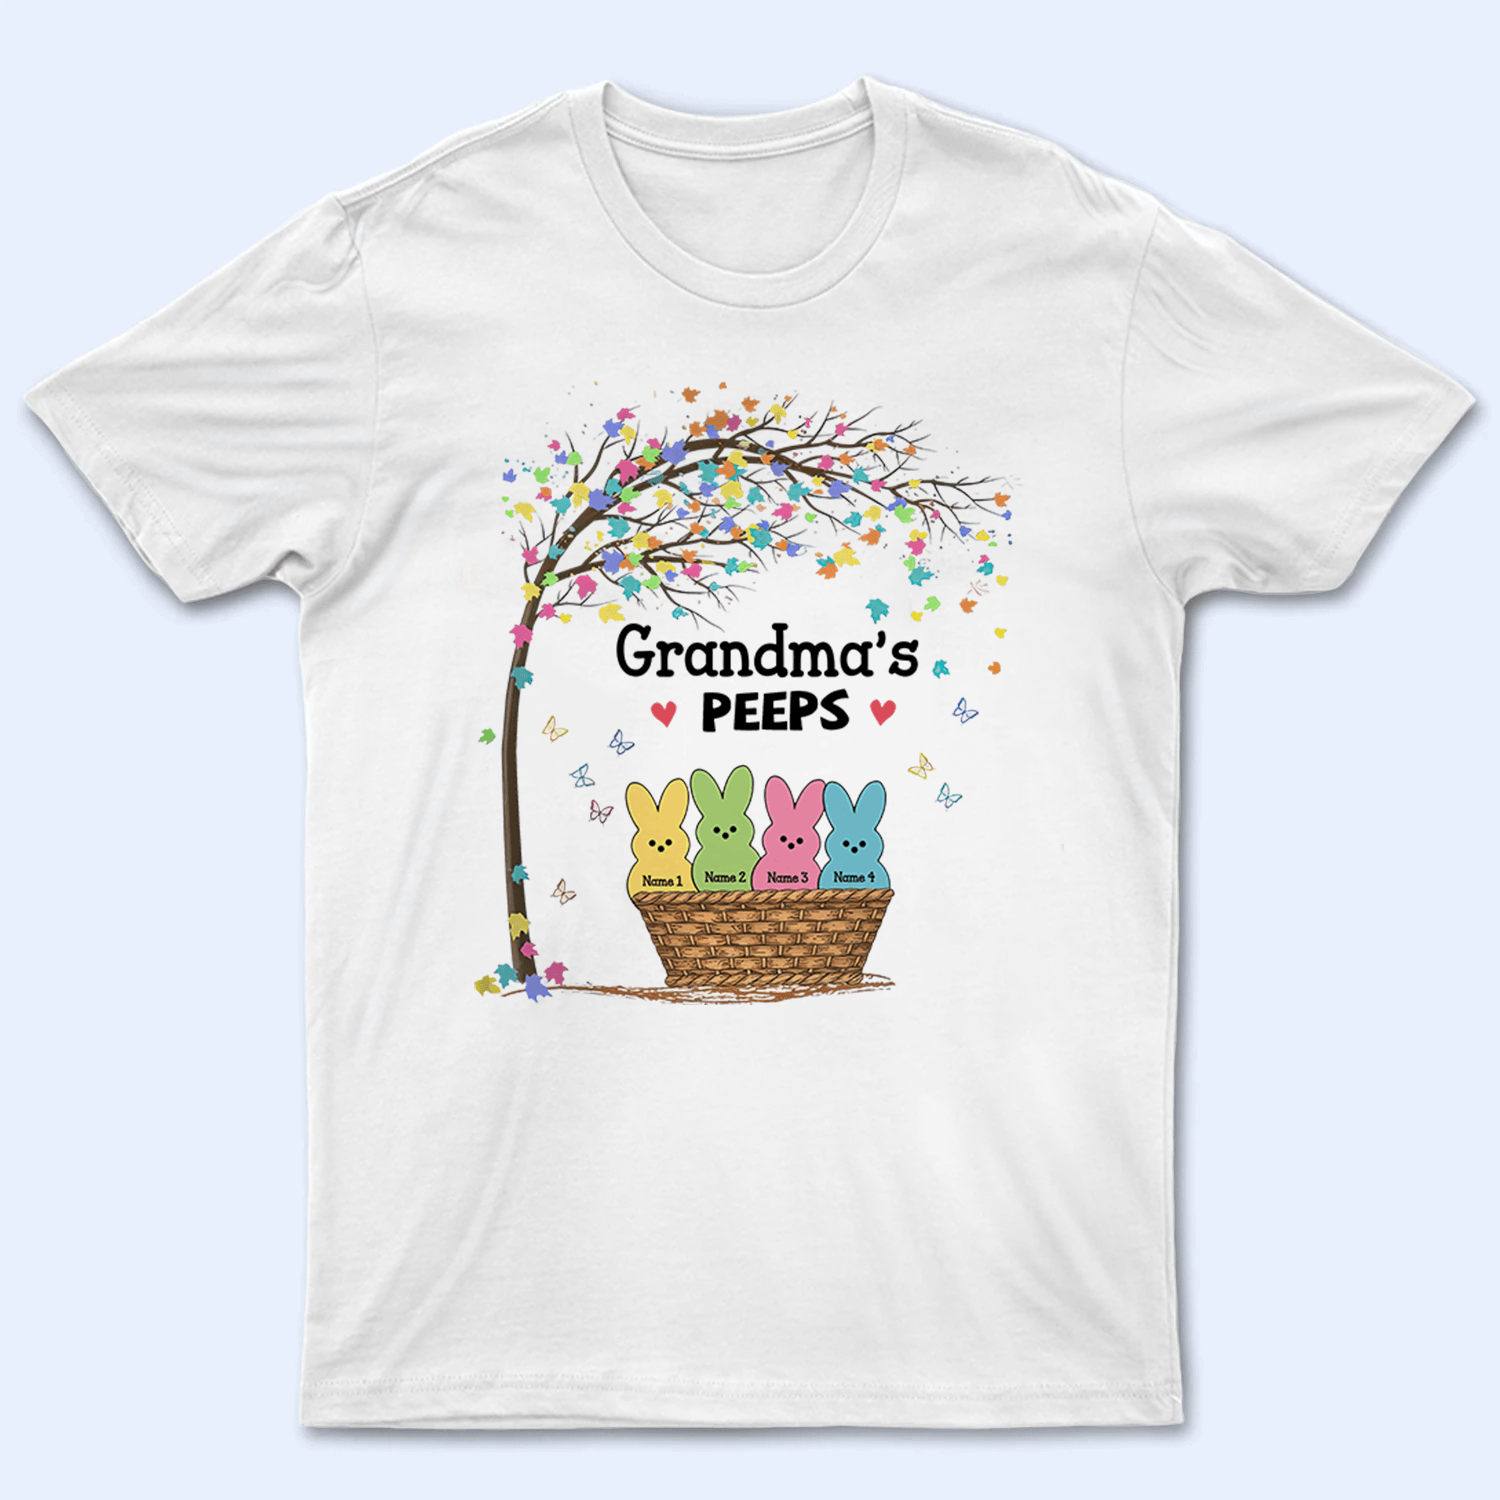 Grandma's Bunnies in a Basket - Personalized Custom T Shirt - Easter, Birthday, Loving, Funny Gift for Grandma/Nana/Mimi, Mom, Wife, Grandparent - Suzitee Store